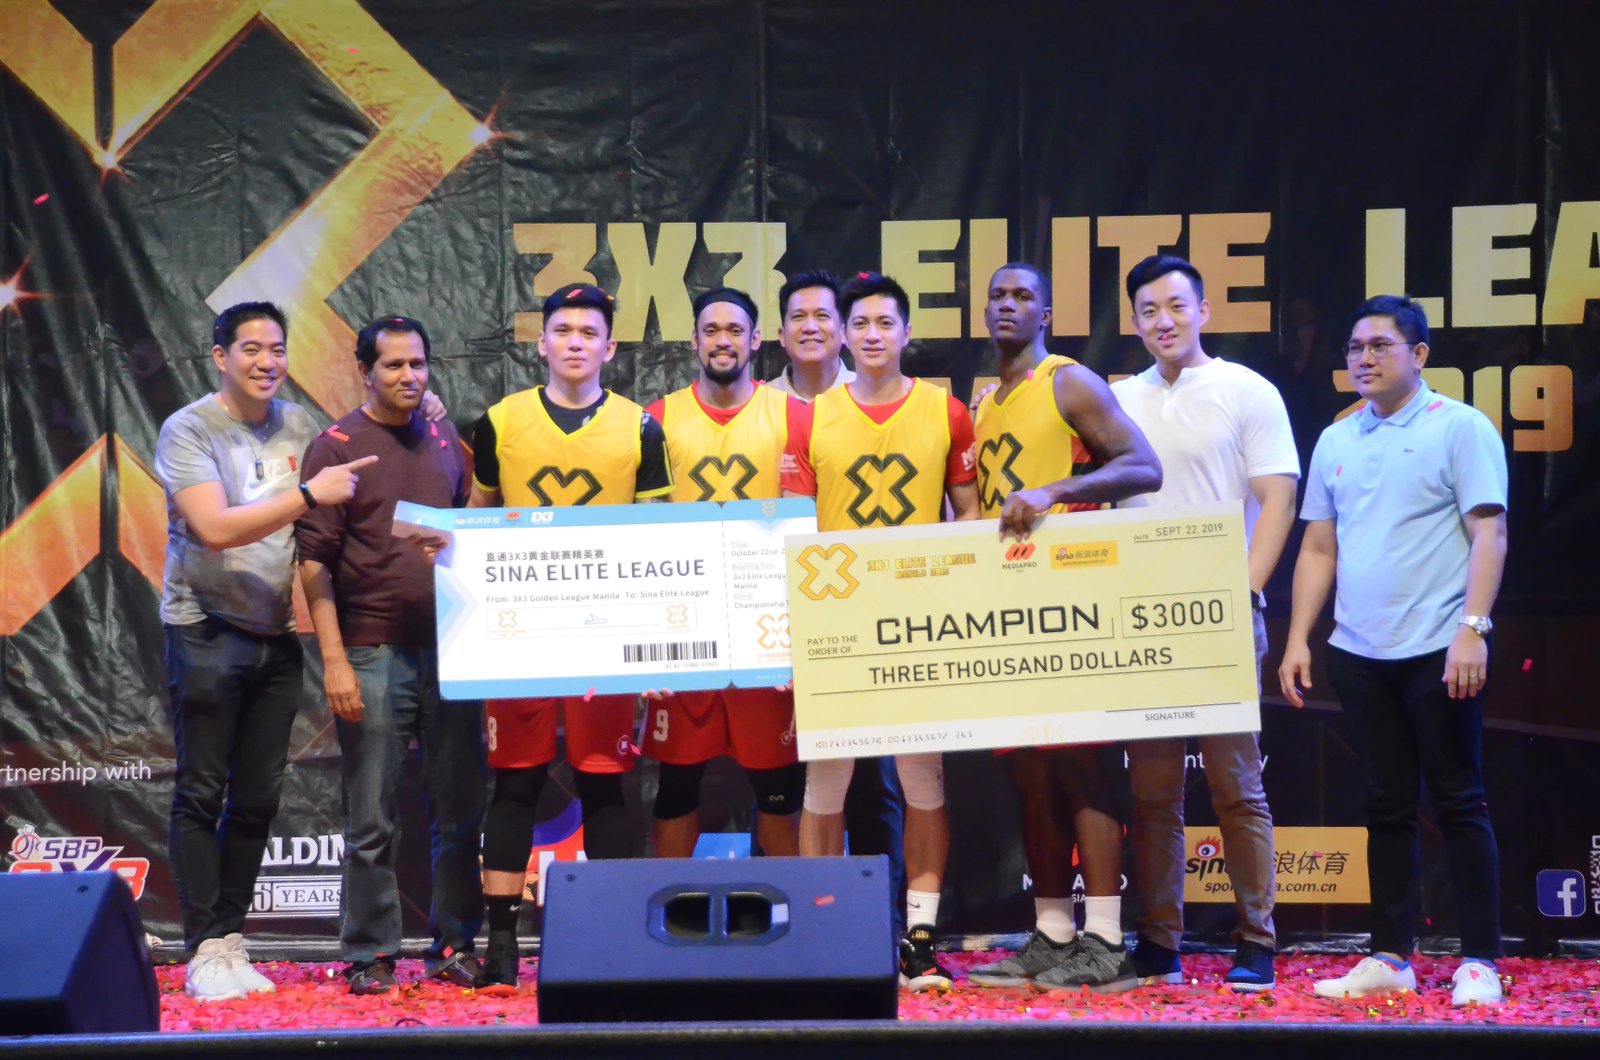 3X3 Elite League Manila: Azi and Tets Travel Tours bags title